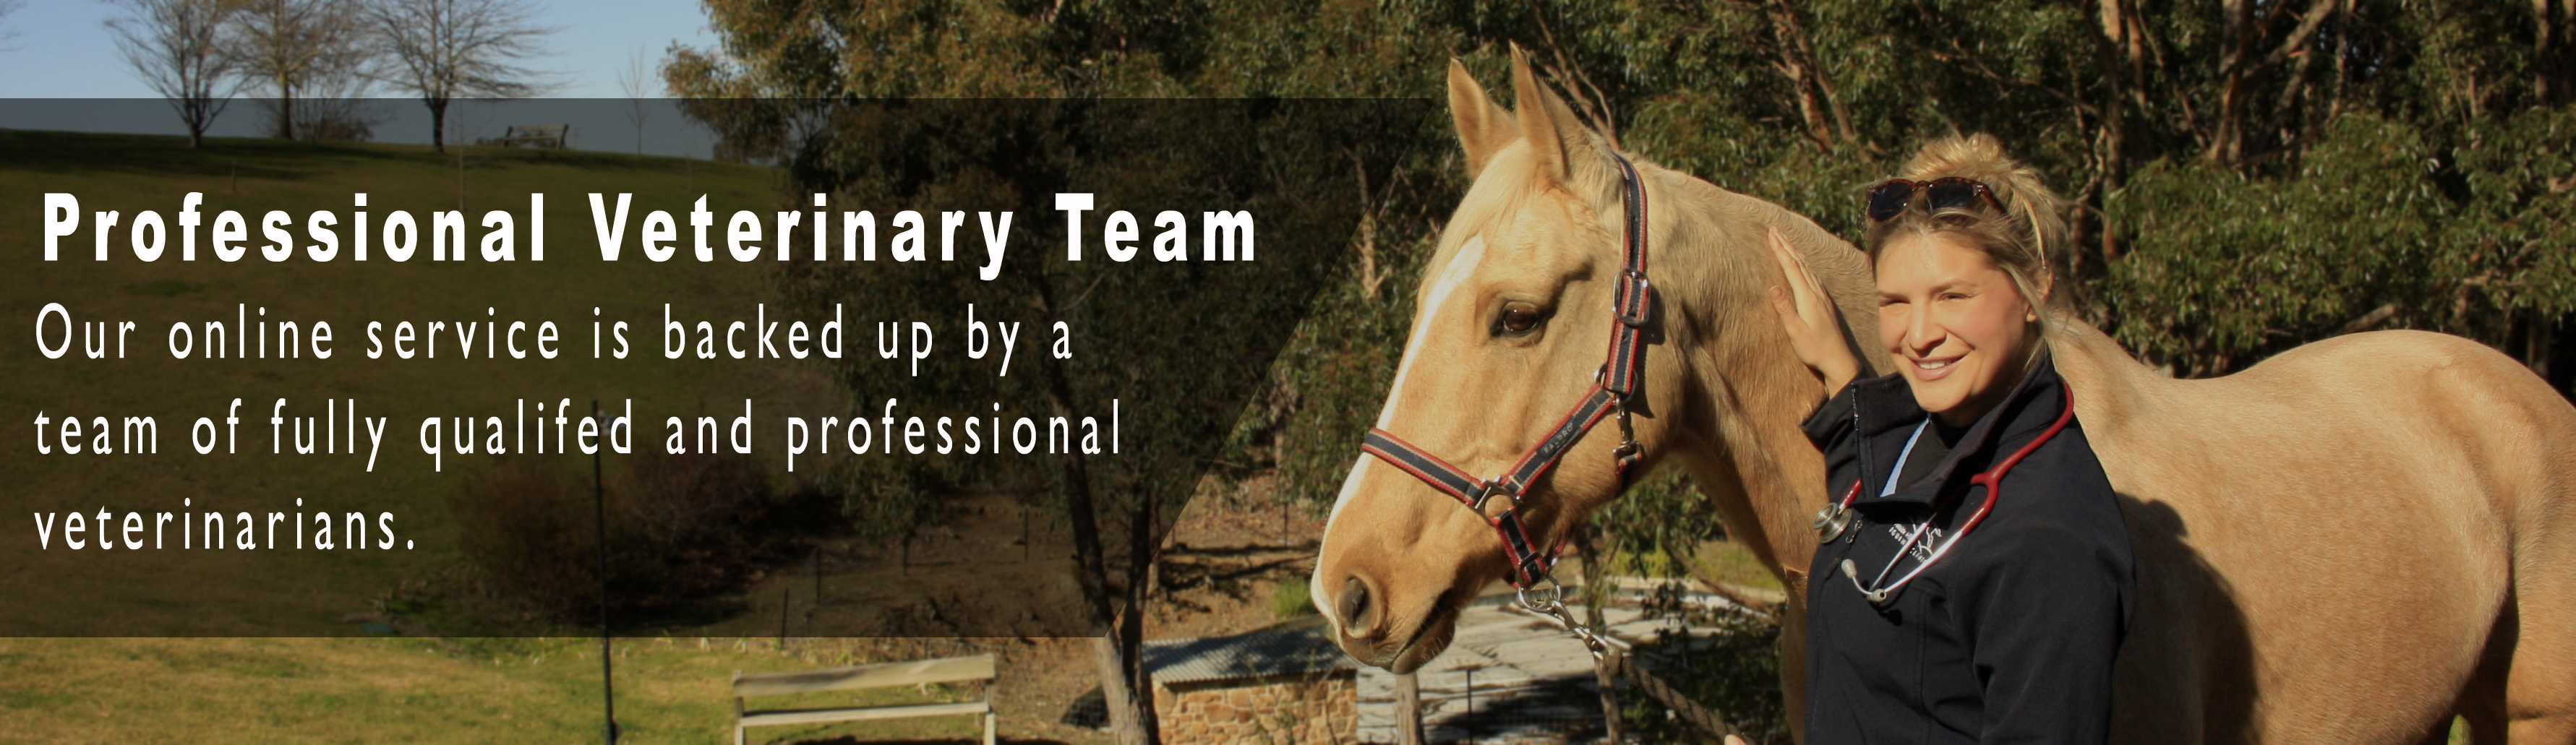 Professional Veterinary Team